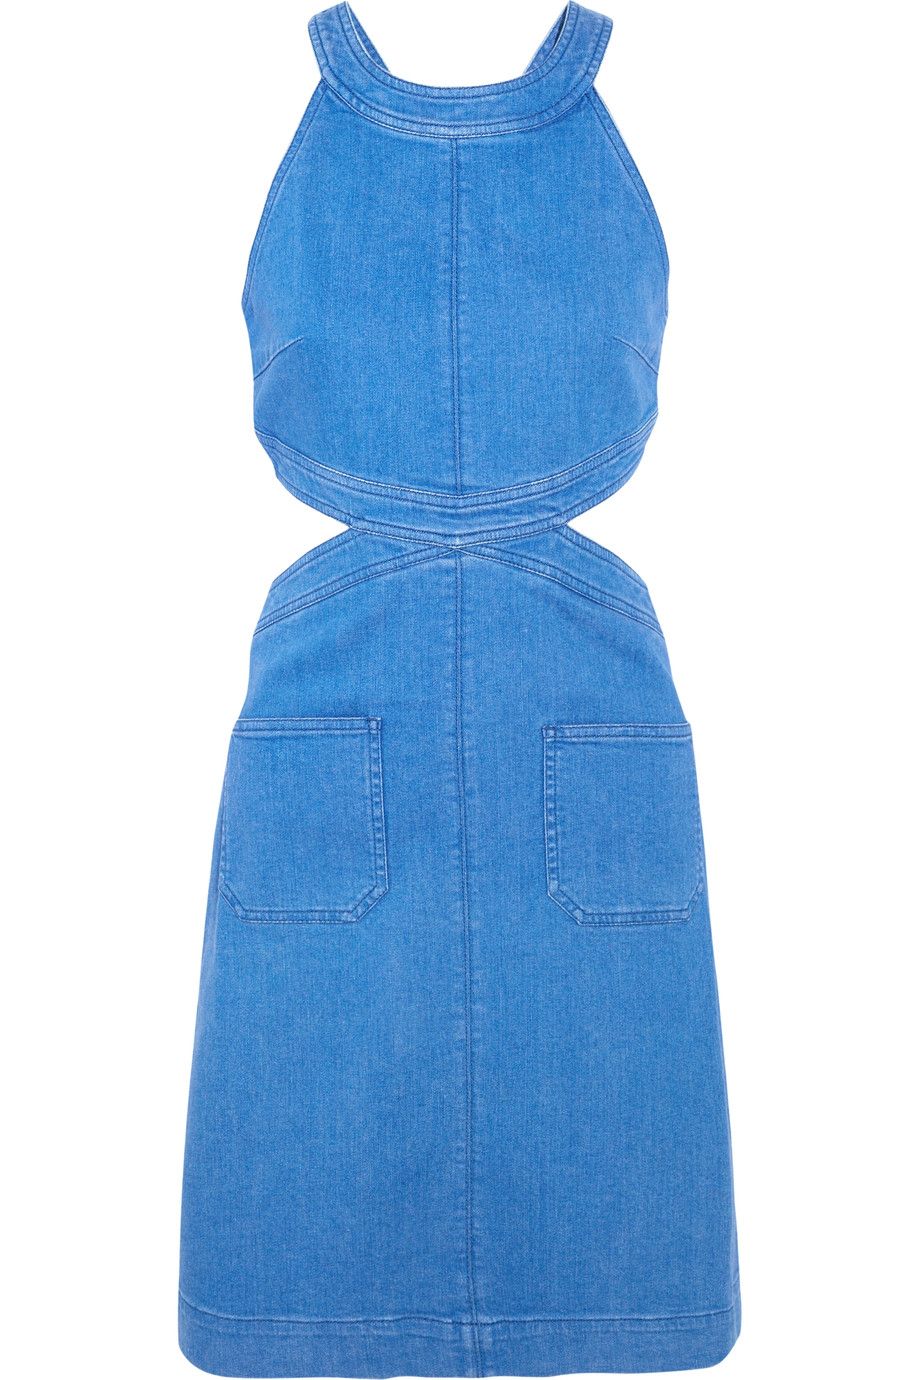 Blue, Clothing, Denim, Cobalt blue, One-piece garment, Product, Turquoise, Dress, Jeans, Azure, 